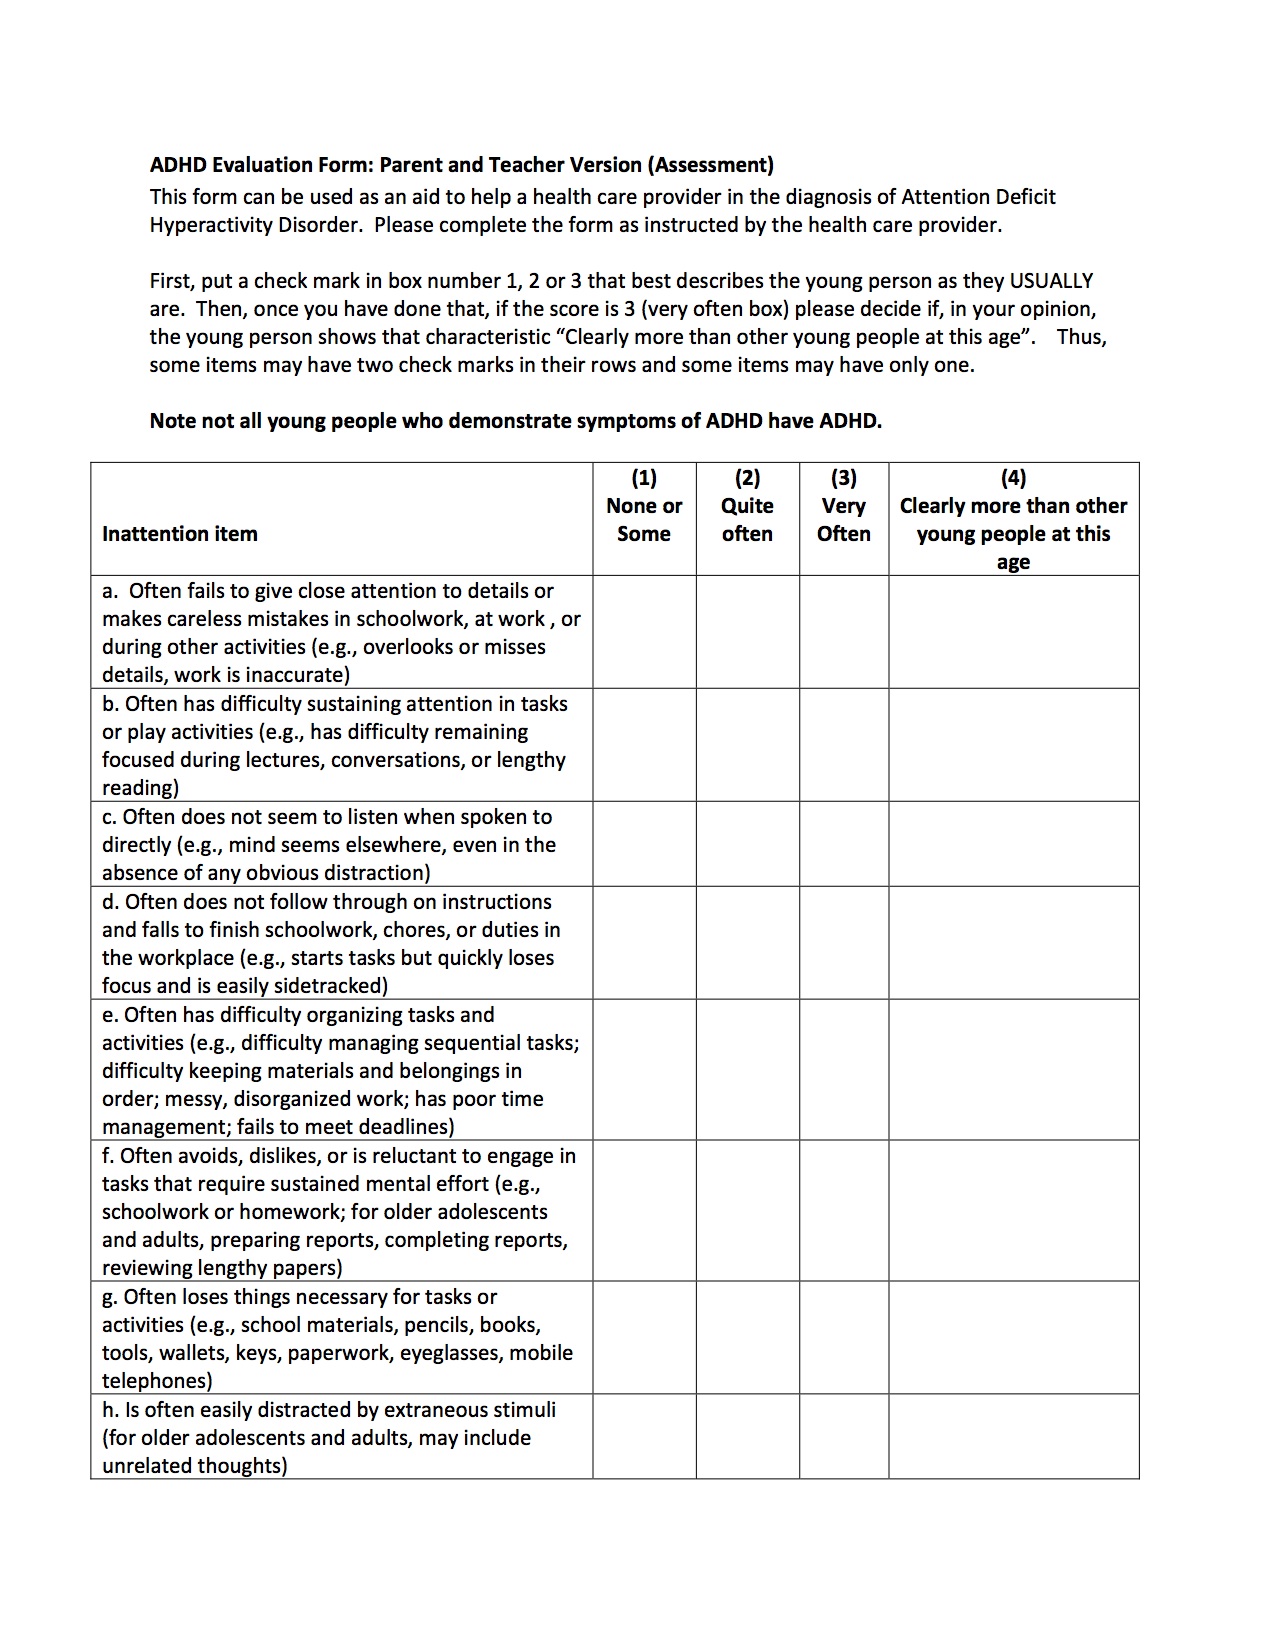 ADHD Parent or Teacher Evaluation Tool cover